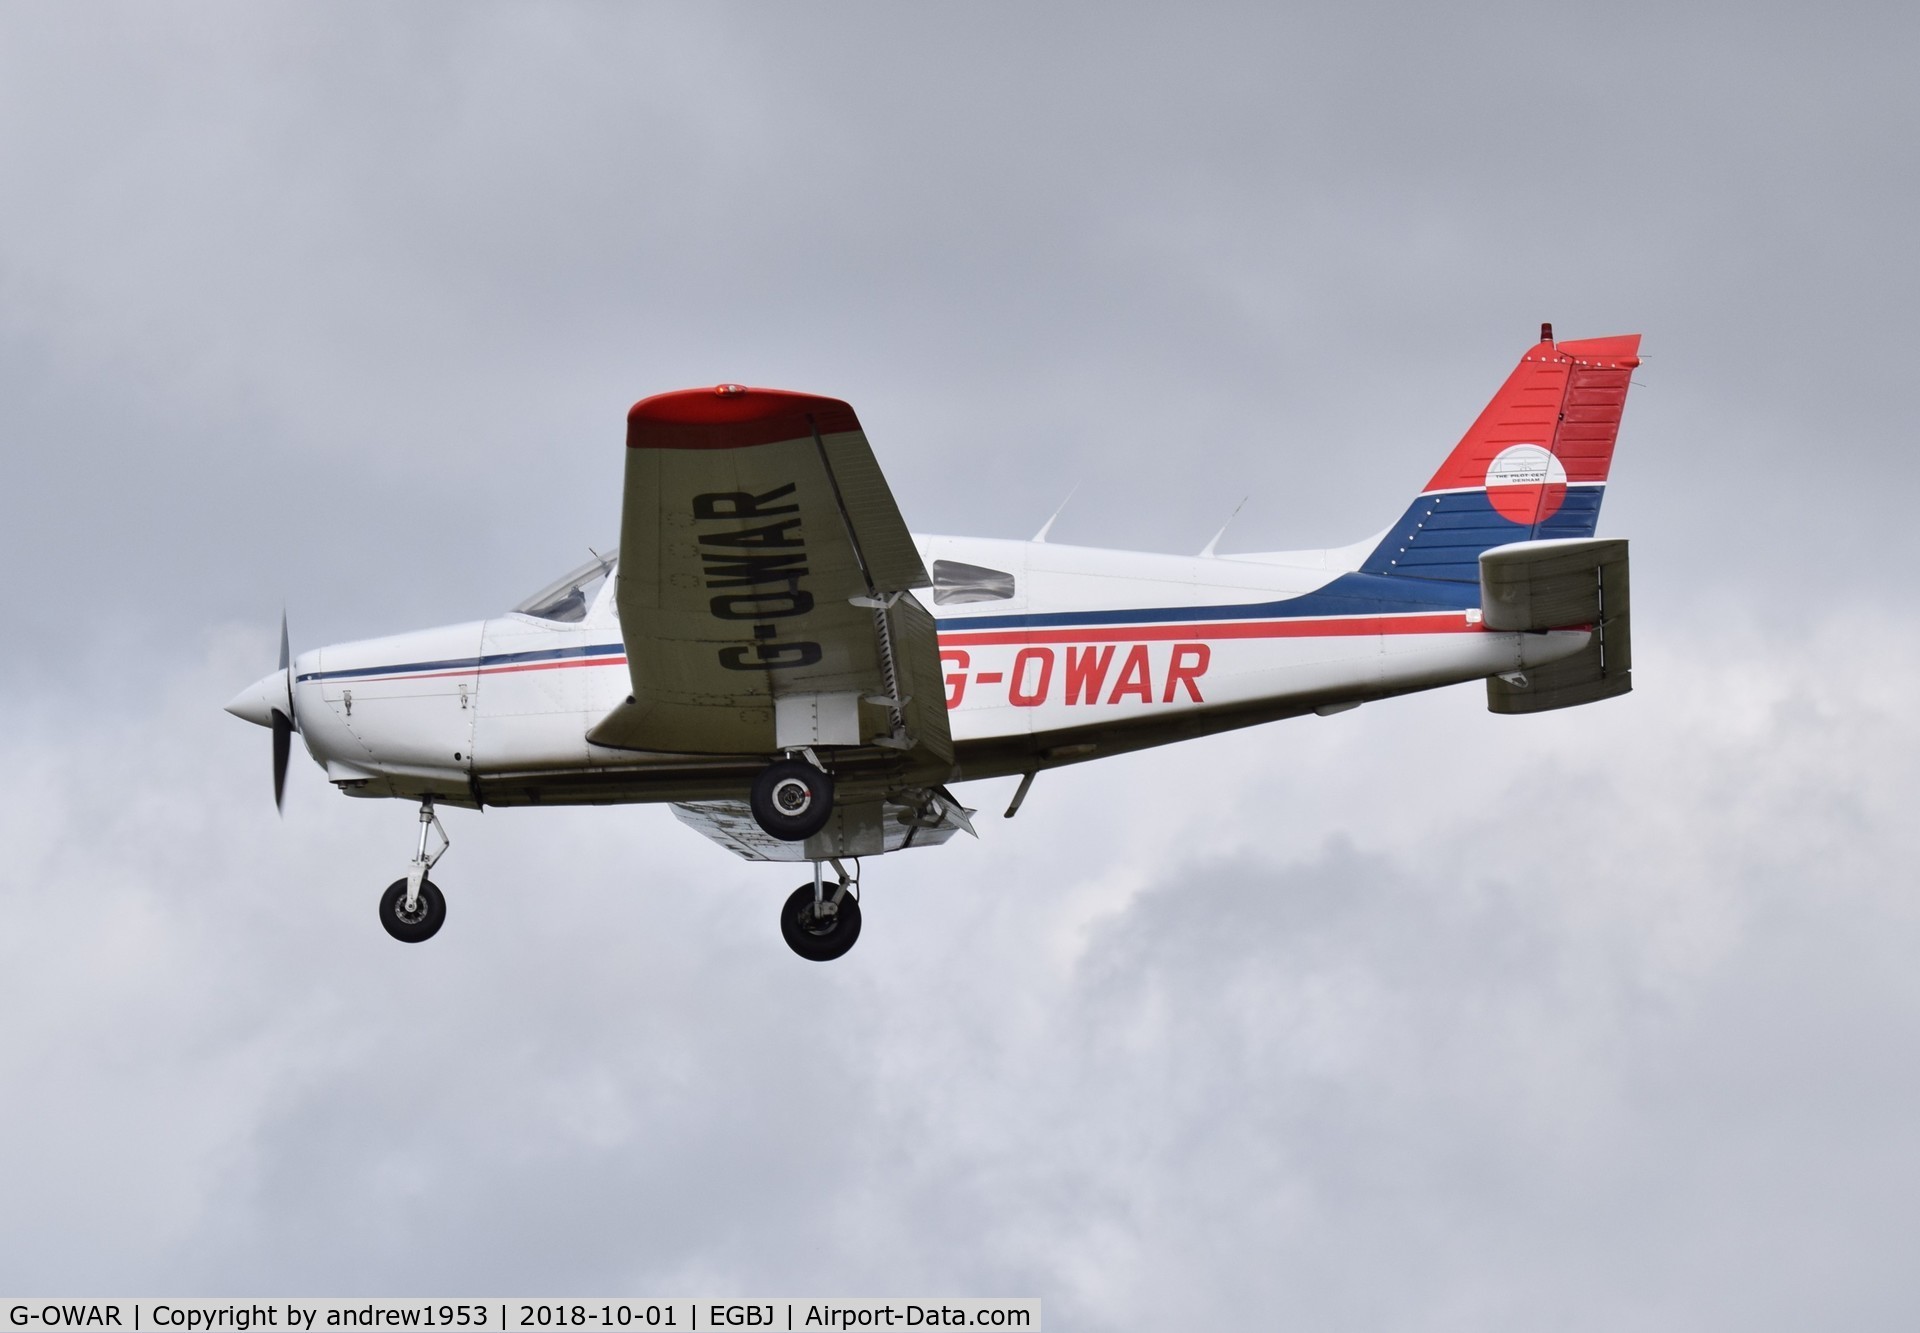 G-OWAR, 1986 Piper PA-28-161 Cherokee Warrior II C/N 28-8616054, G-OWAR at Gloucestershire Airport.